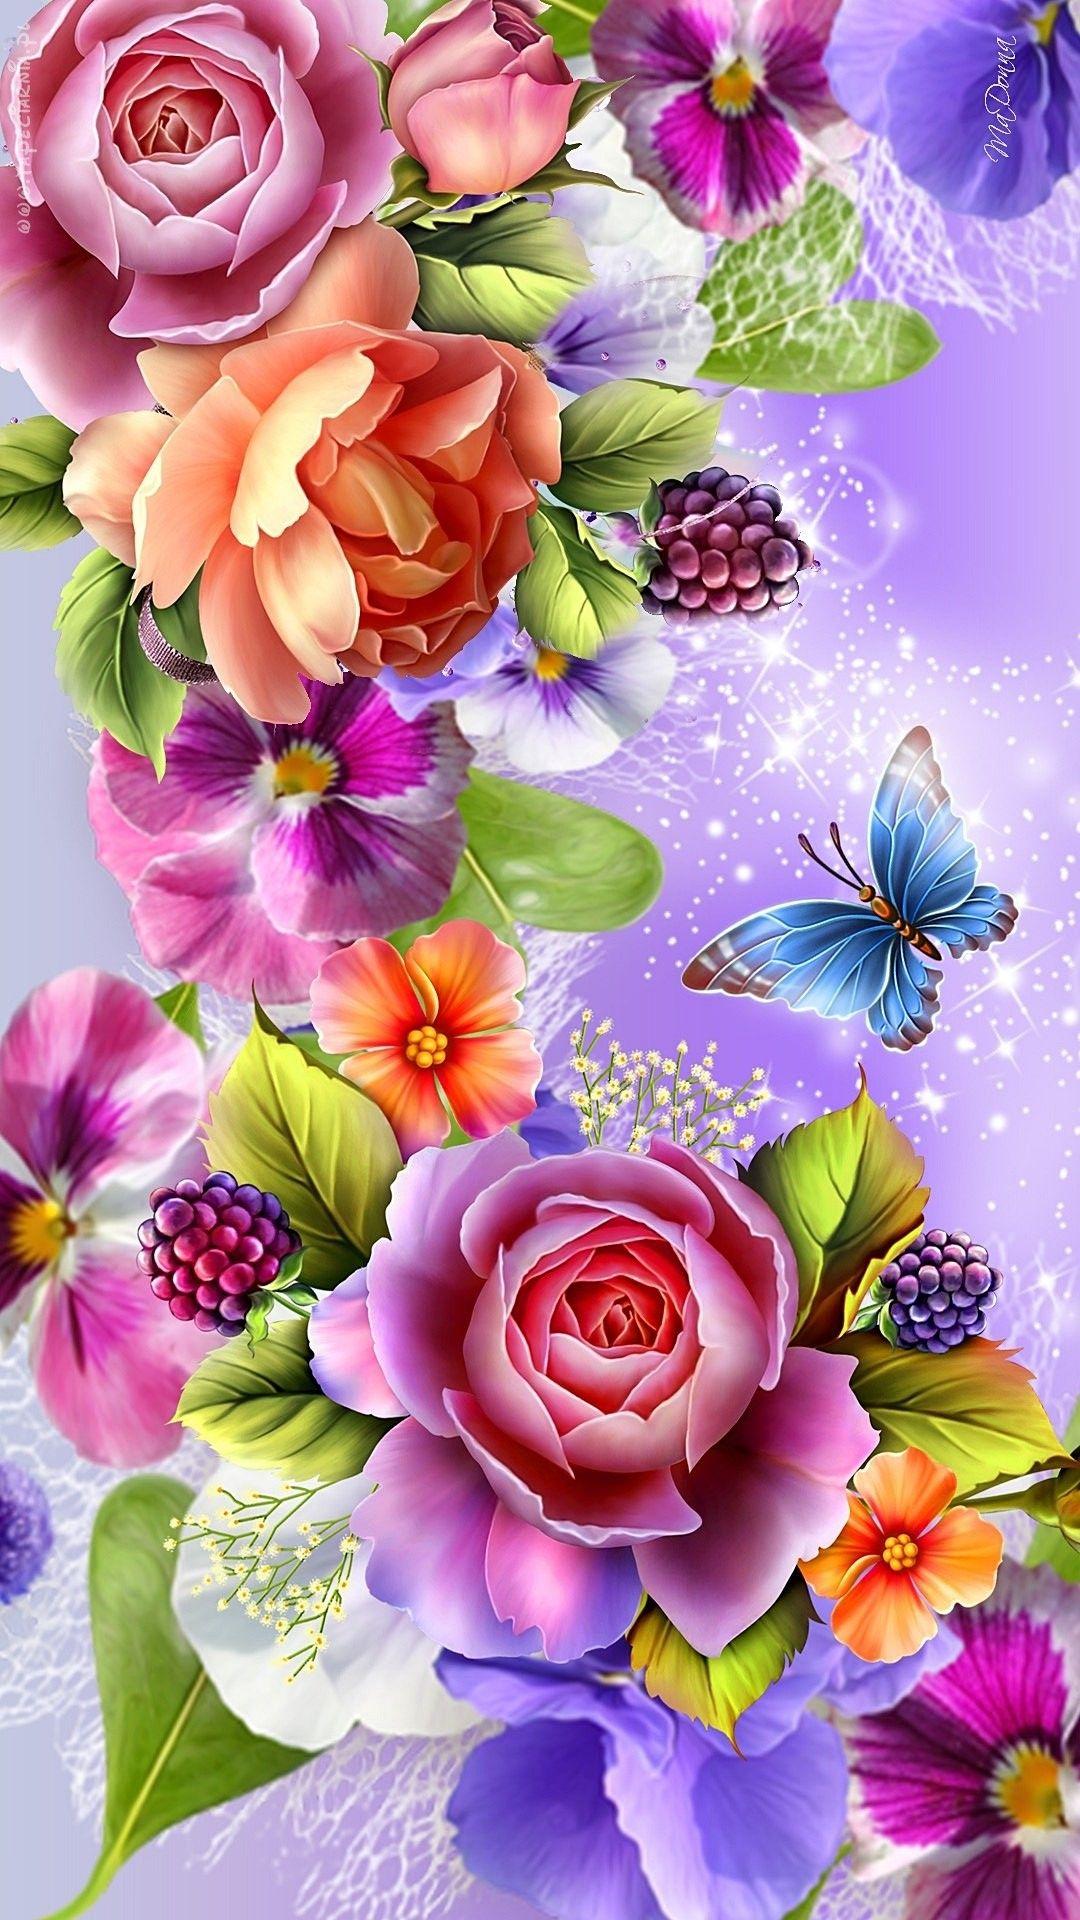 Belezas Da Net. Flower art, Flower painting, Flower phone wallpaper